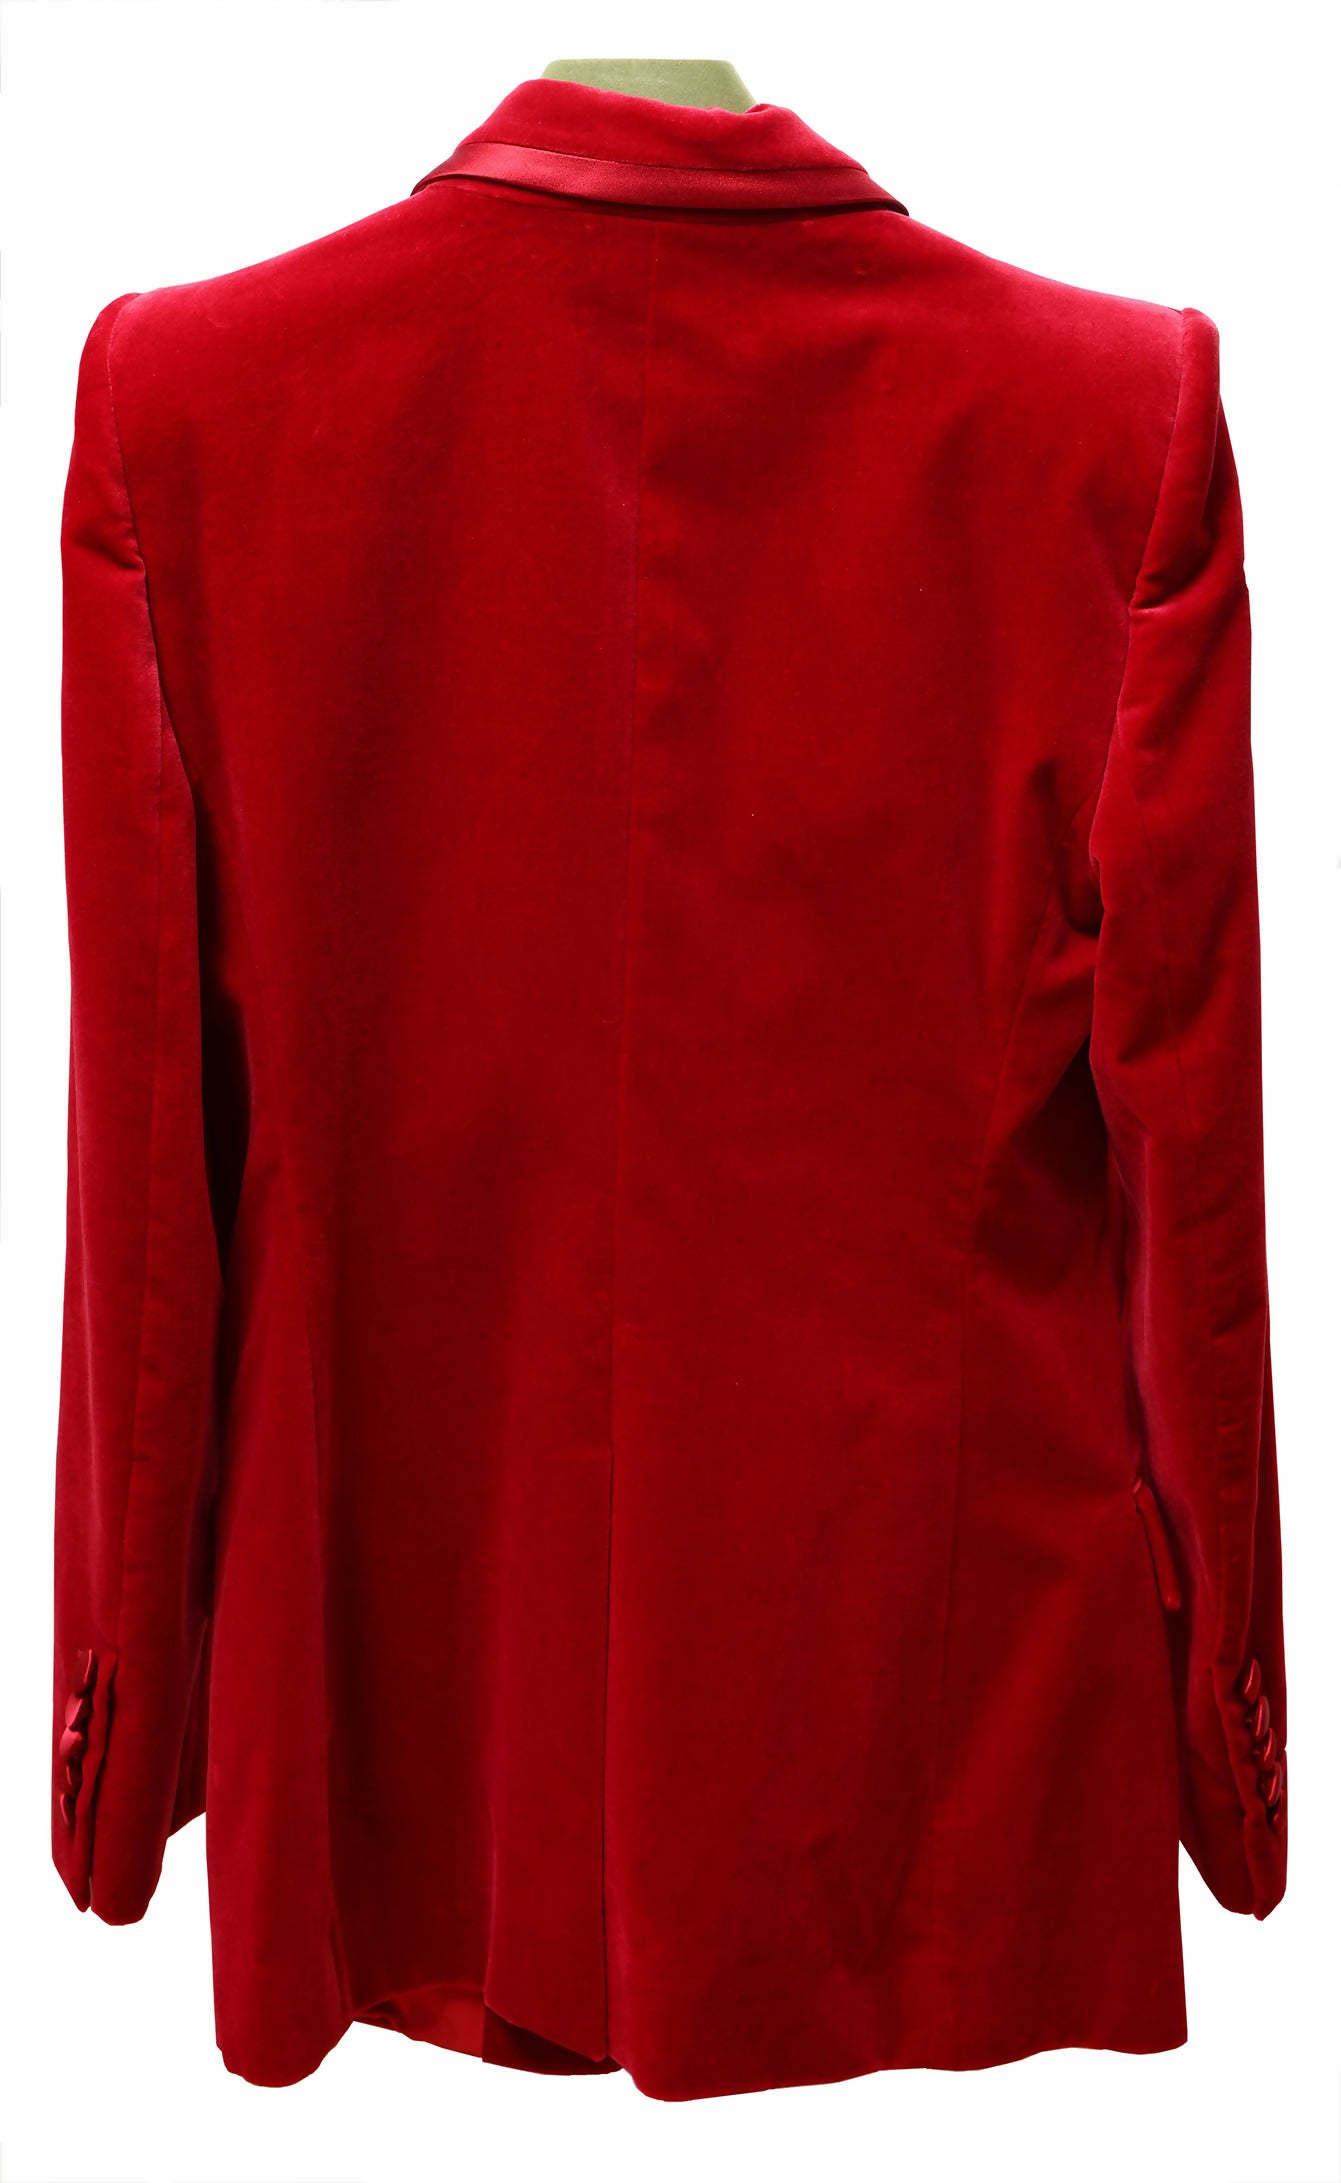 Tom Ford Red Velvet Gucci Suit